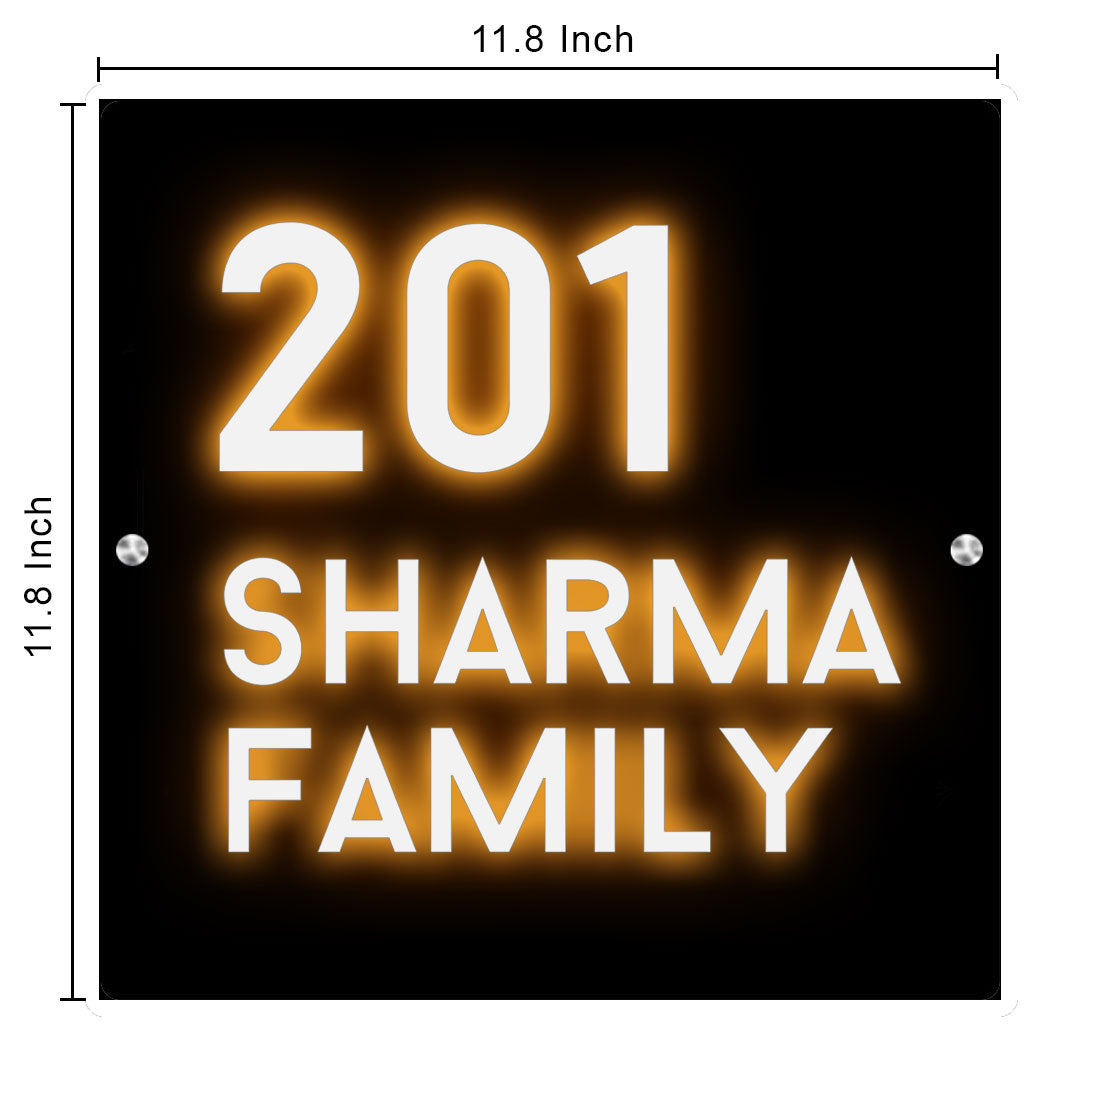 LED Light Name Board For Home Backlit Name Plate Square